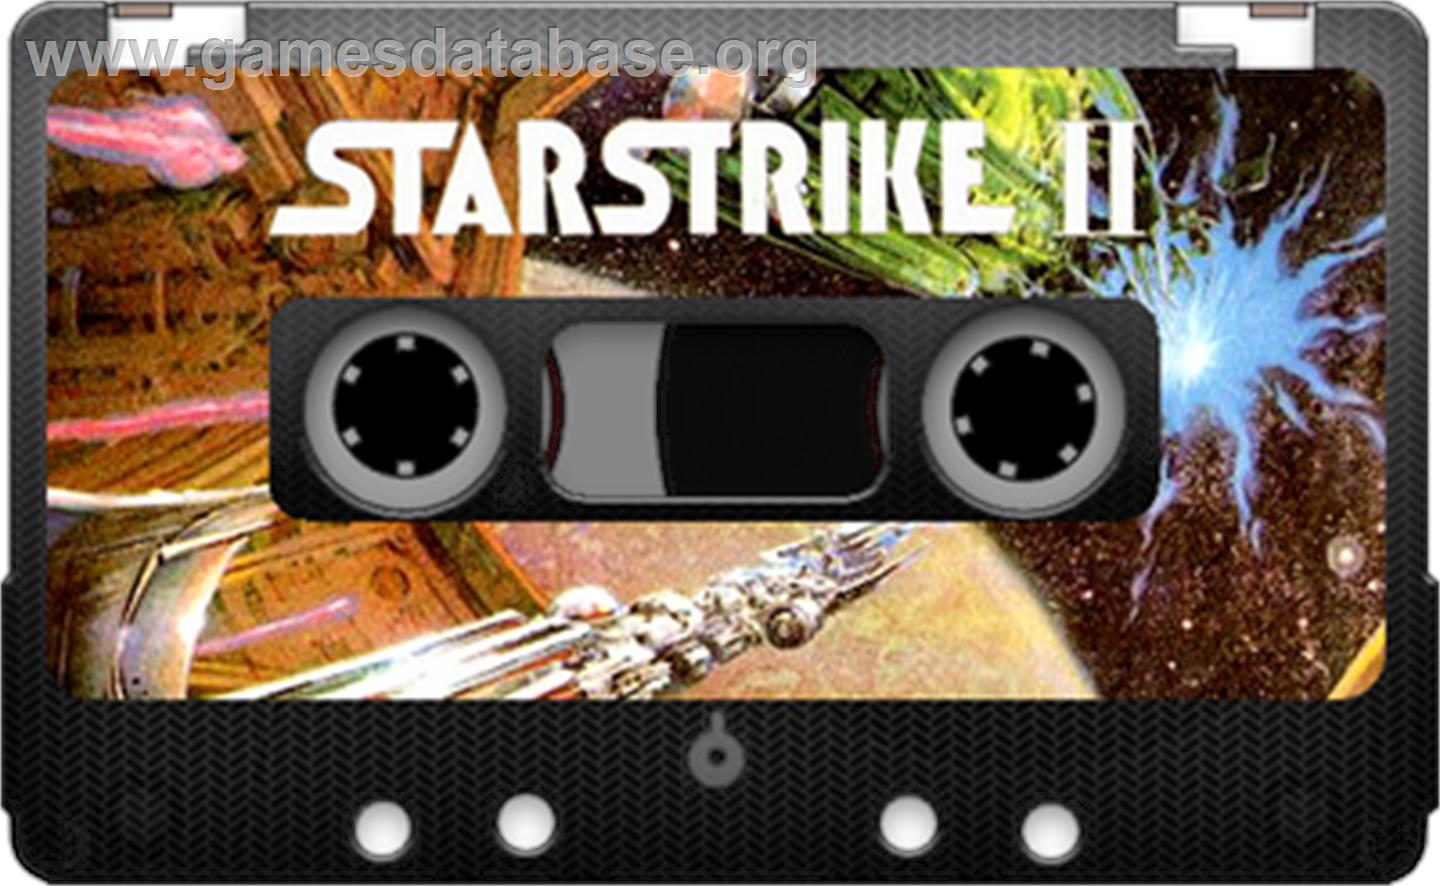 Starstrike II - Sinclair ZX Spectrum - Artwork - Cartridge